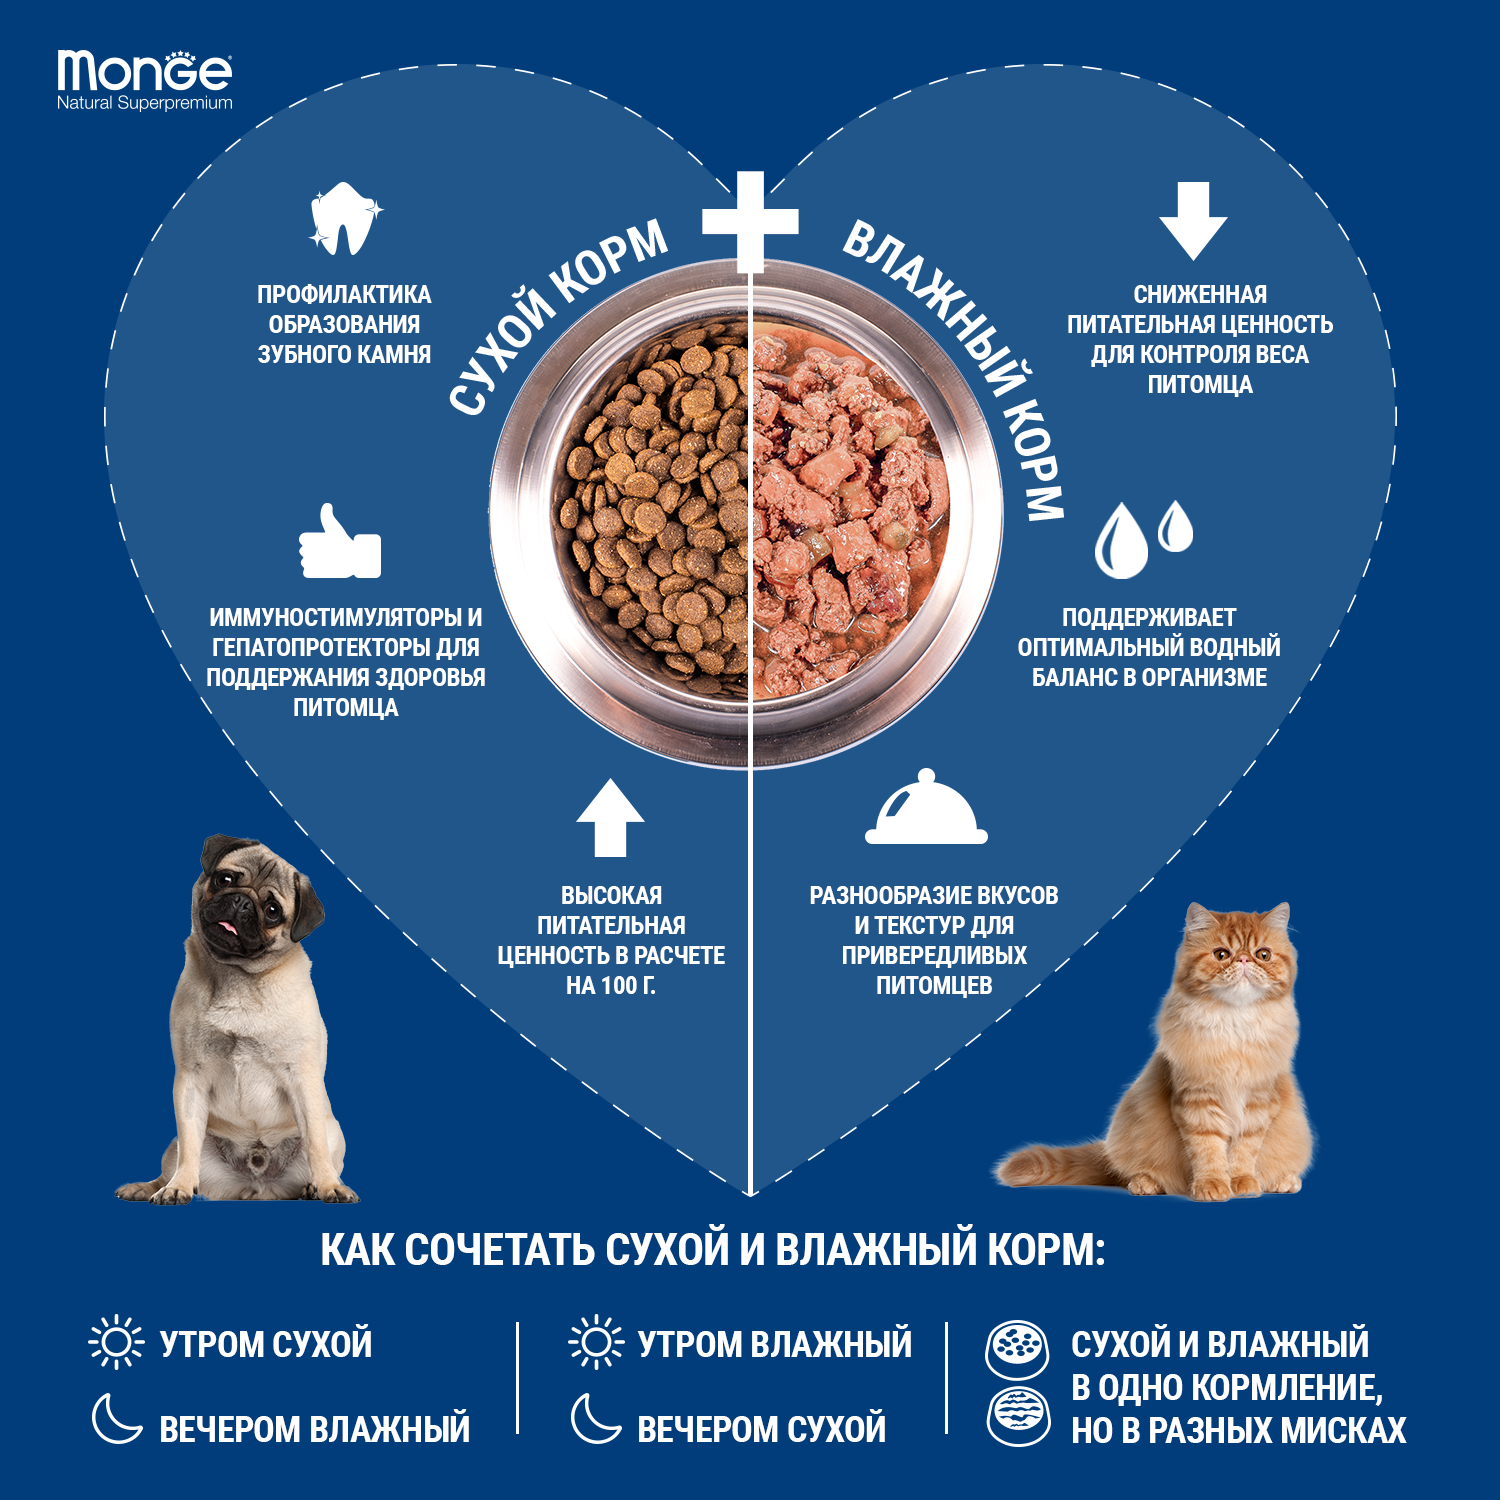 Monge Cat Monoprotein Sterilised Beef корм для стерилизованных кошек с говядиной 1,5 кг